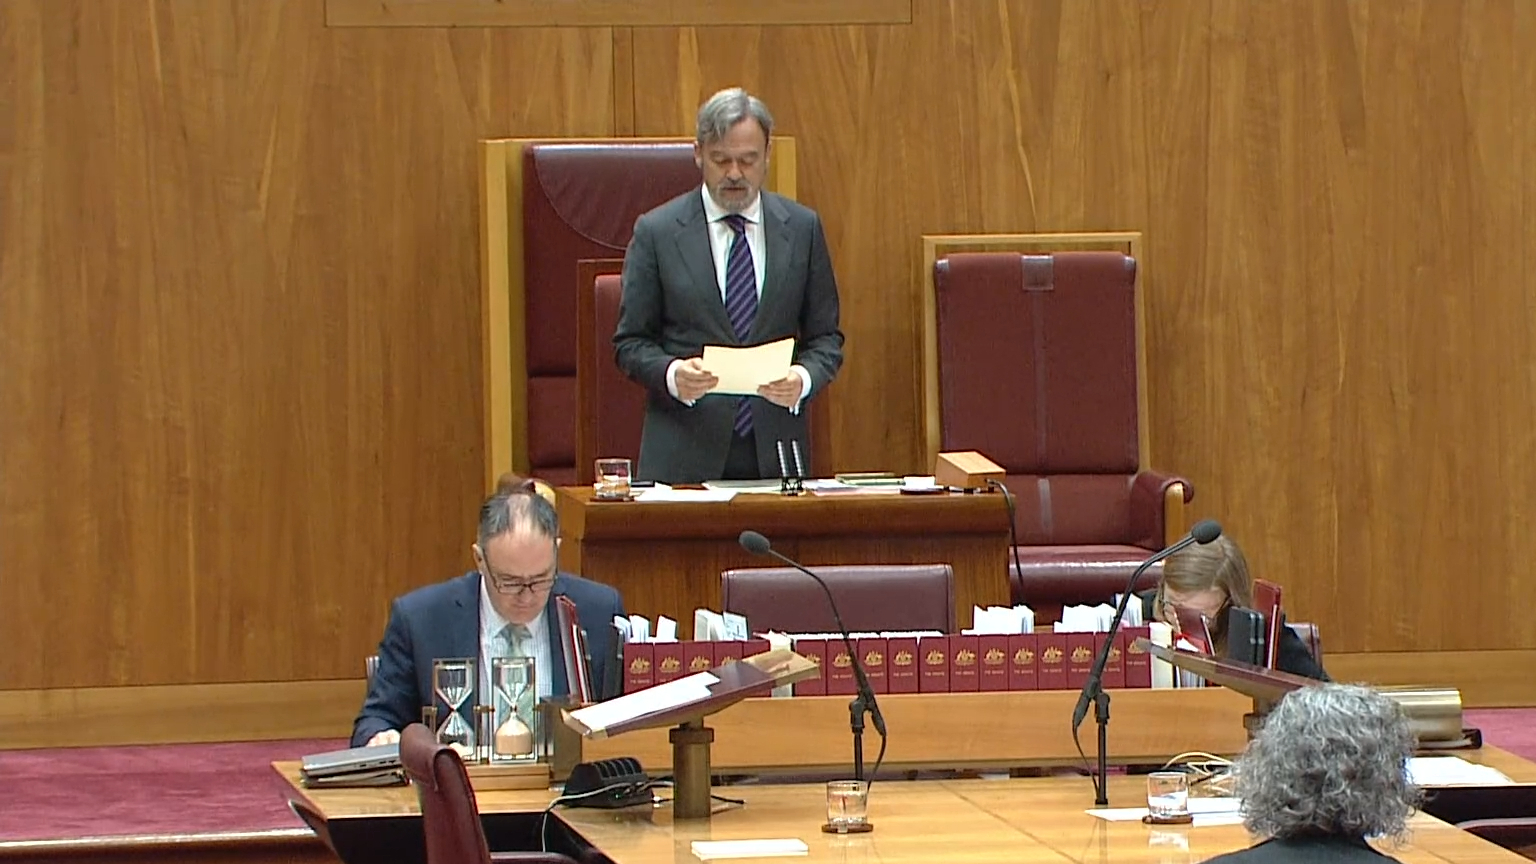 Senate debating whether to grant every Australian a tax cut